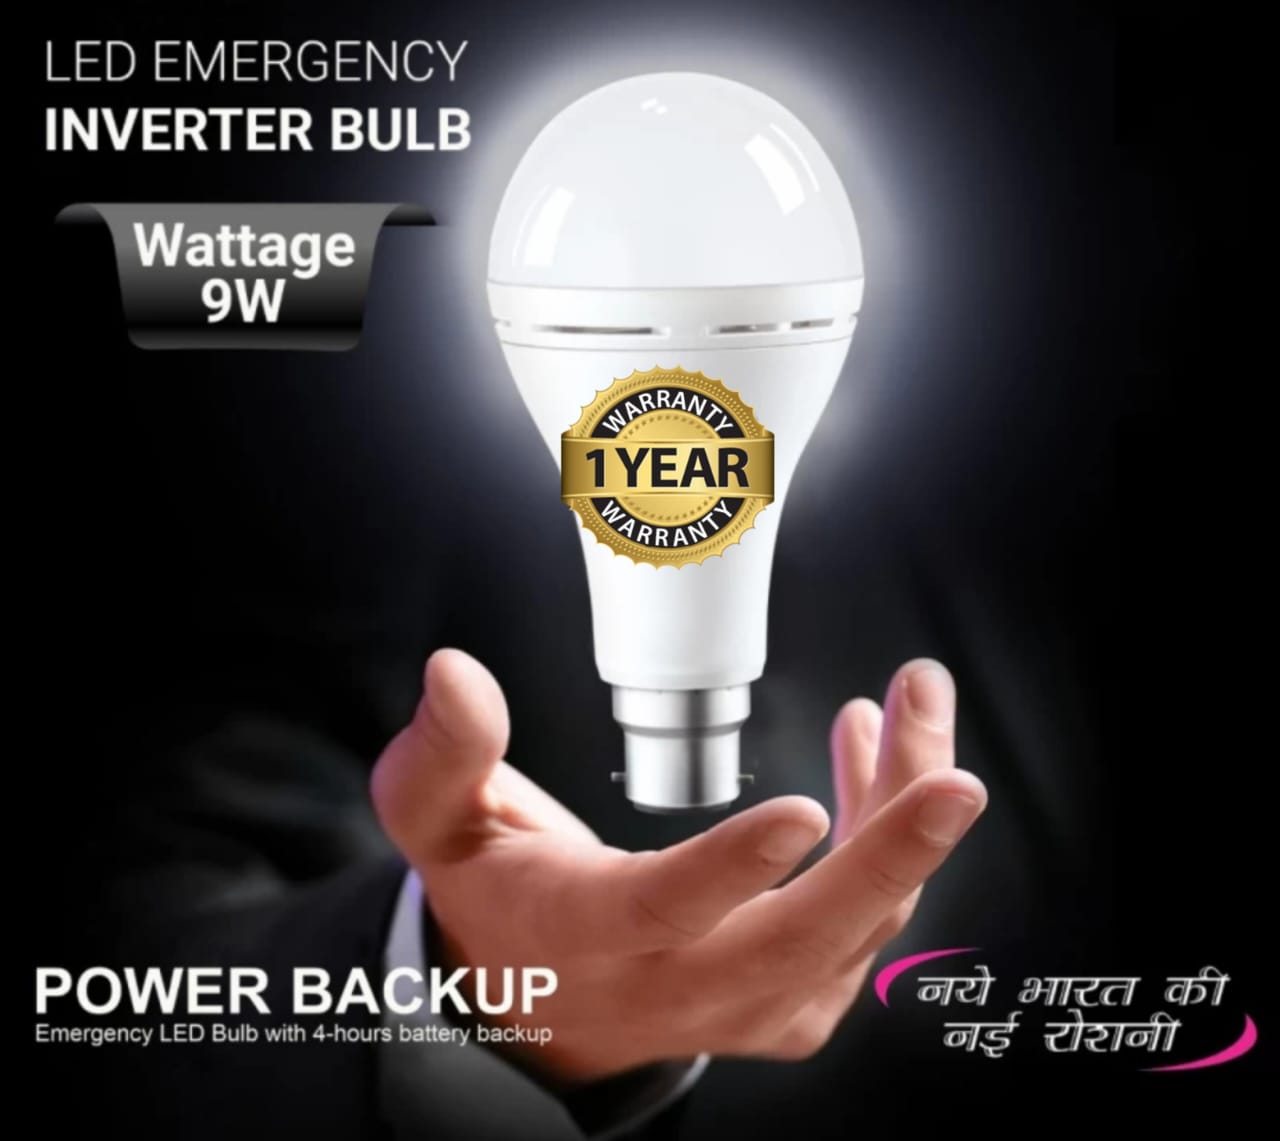 Emergency LED Rechargeable Inverter Bulb (1 Year Warranty)